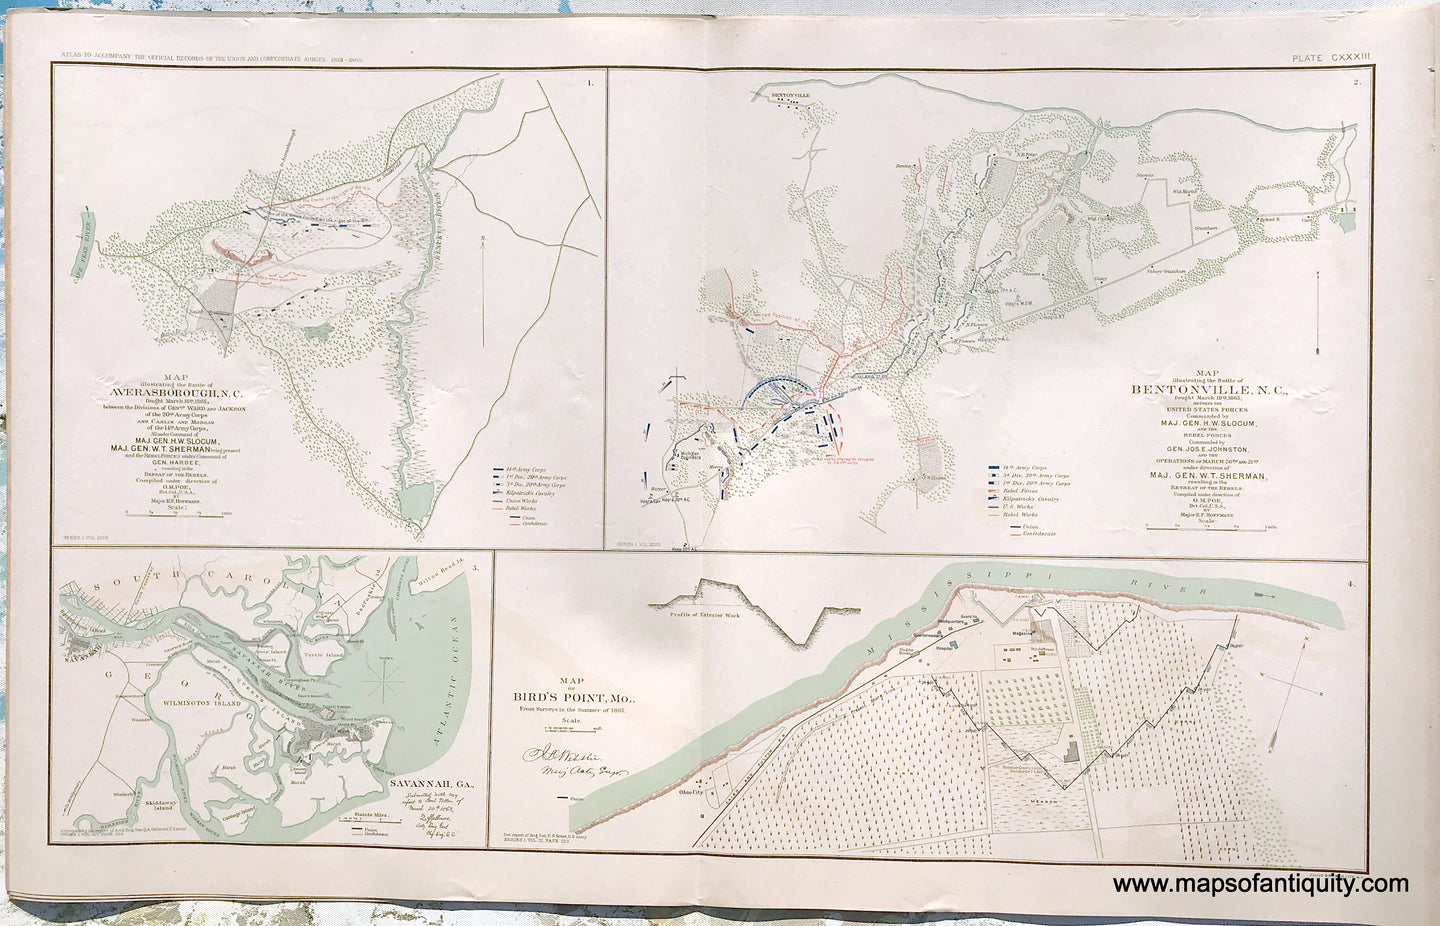 Antique-Lithograph-Print-Plate-133.-The-Battle-of-Averasborough-NC-/-The-Battle-of-Bentonville-NC.-/-Savannah-GA.-March-30-1862-/-Bird's-Point-Missouri-1861.-1894-US-War-Dept.-Civil-War-Civil-War-1800s-19th-century-Maps-of-Antiquity